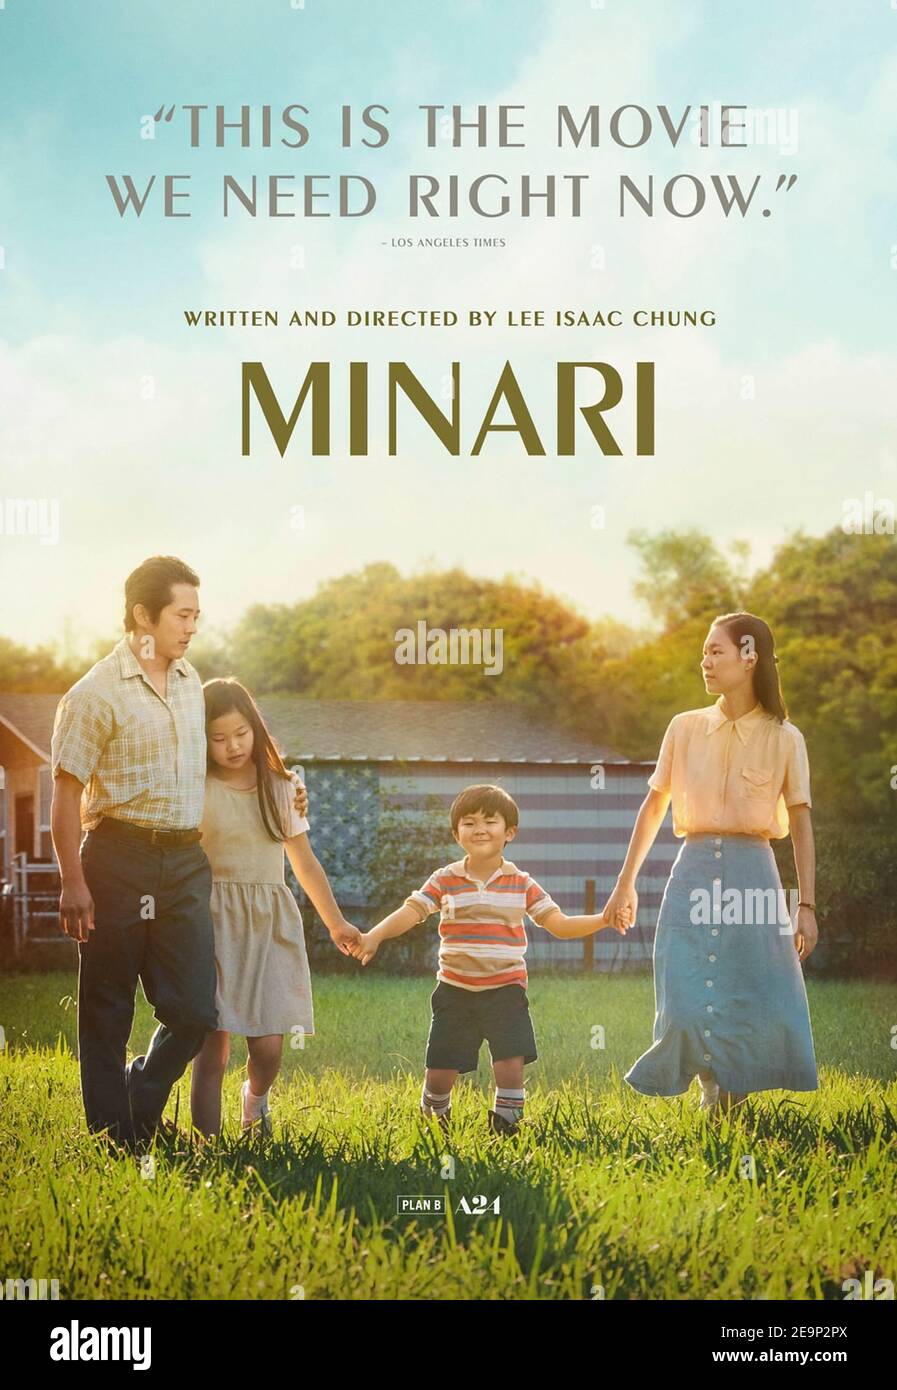 Minari (2020) directed by Lee Isaac Chung and starring Steven Yeun, Yeri Han and Alan S. Kim. A Korean family starts a farm in 1980s Arkansas. Stock Photo